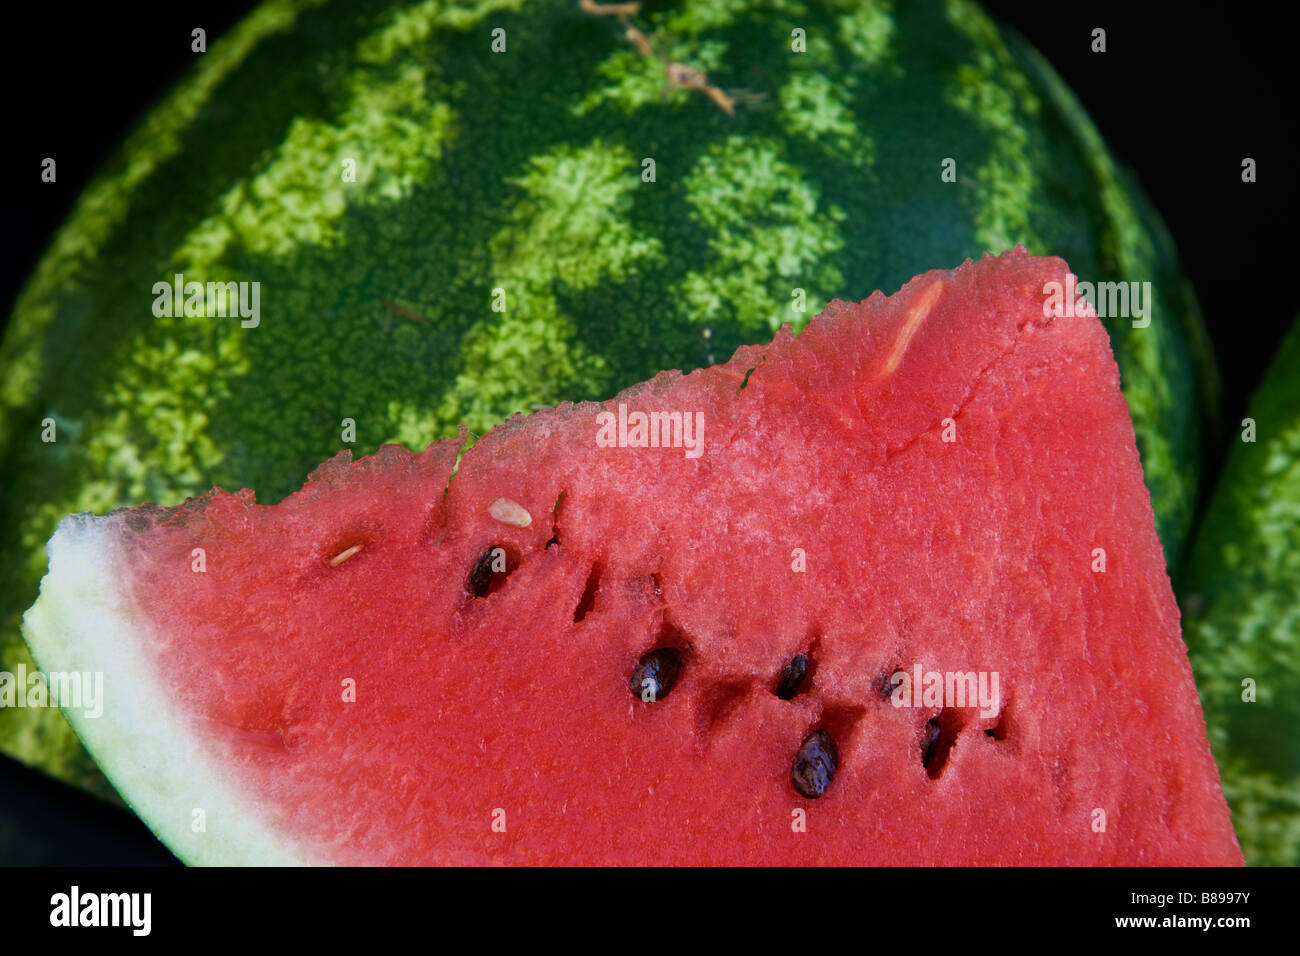 Watermelon slice against exterior of melon. Stock Photo